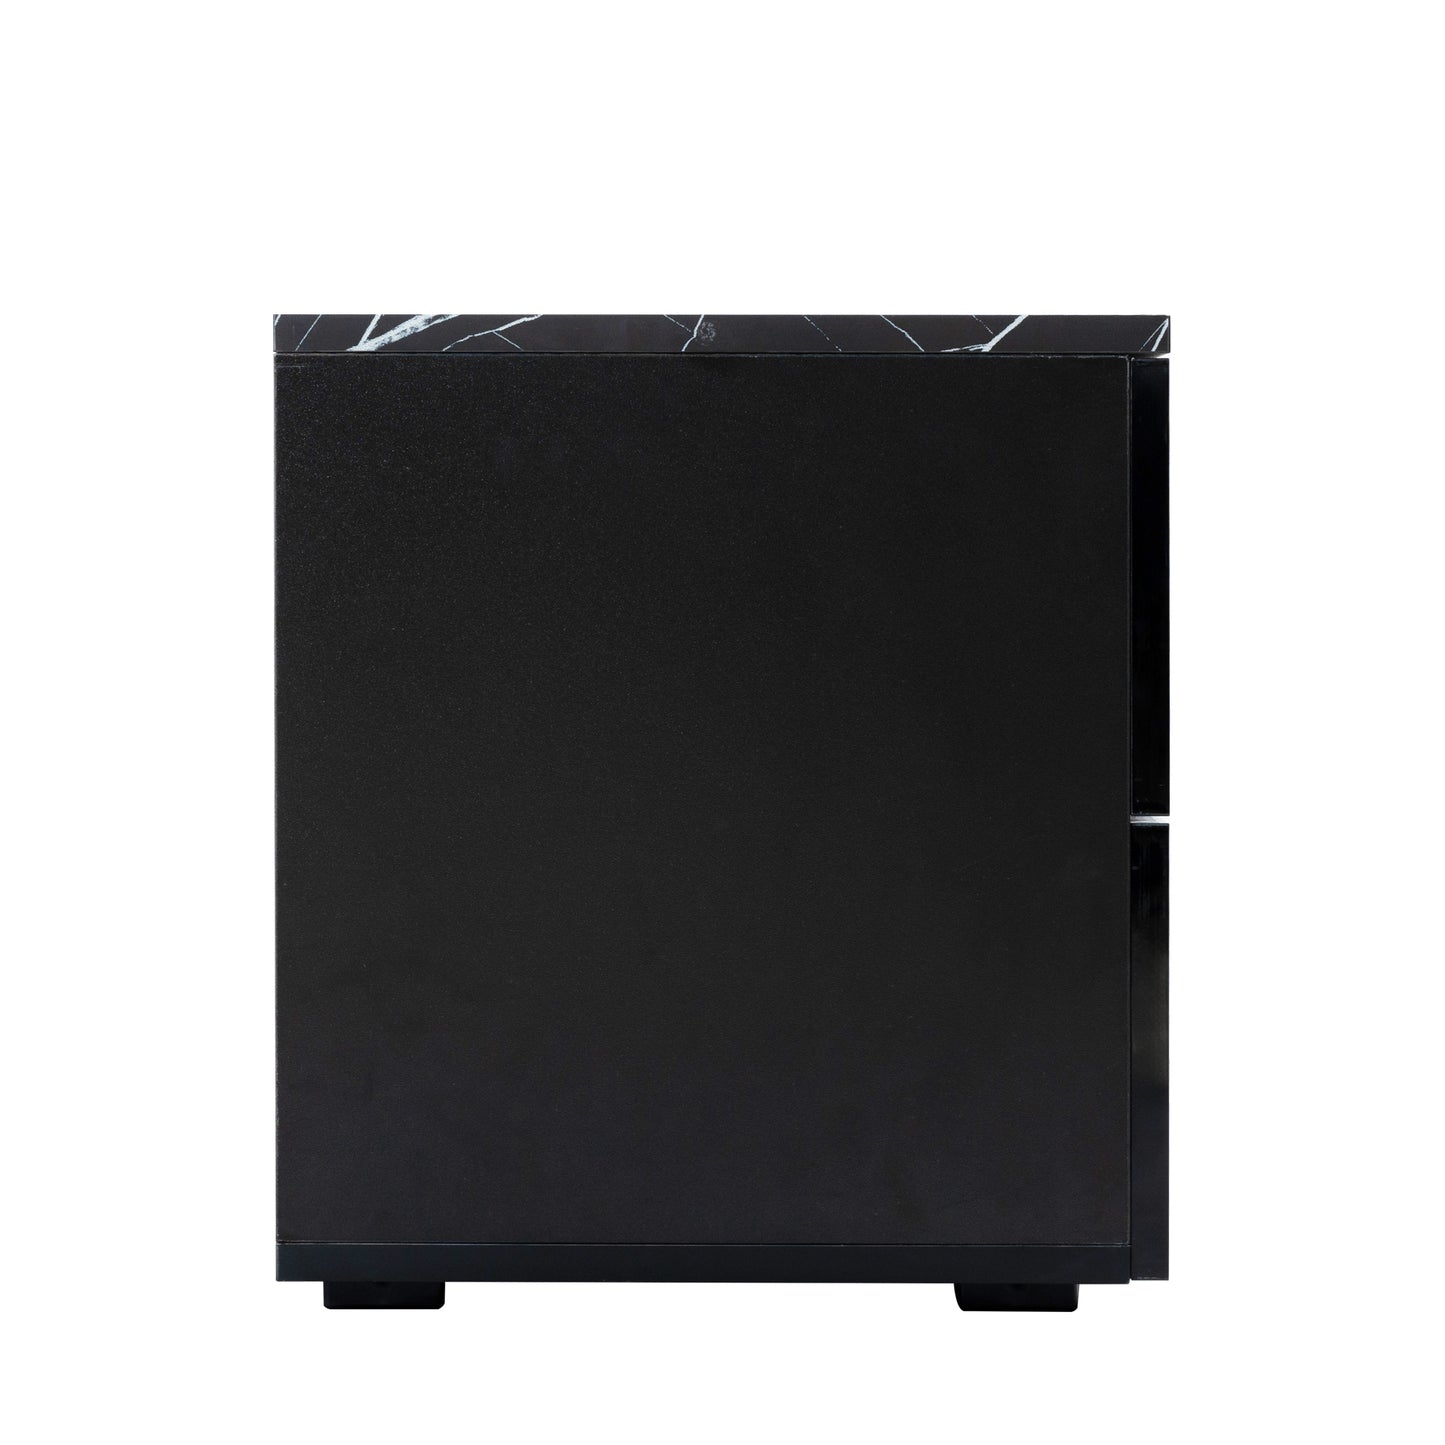 canon Tv Console in Black Finish w/ UV Drawer Panels